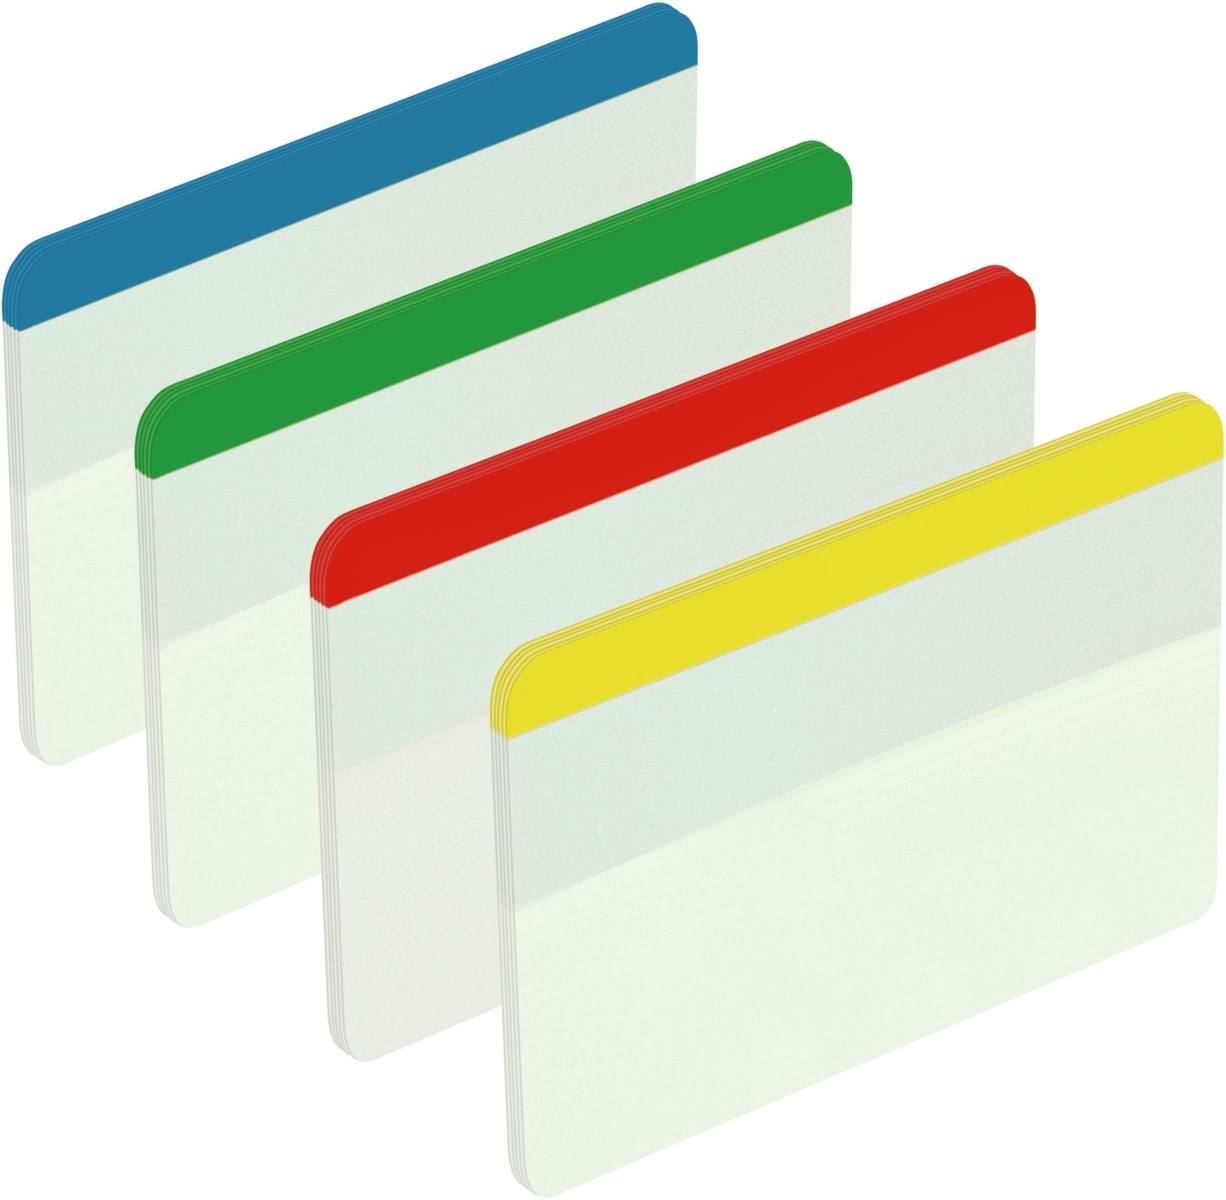 3M Post-it Index Strong 686-F1EU, 50,8 mm x 38 mm, azul, amarillo, verde, rojo, 4 x 6 tiras adhesivas